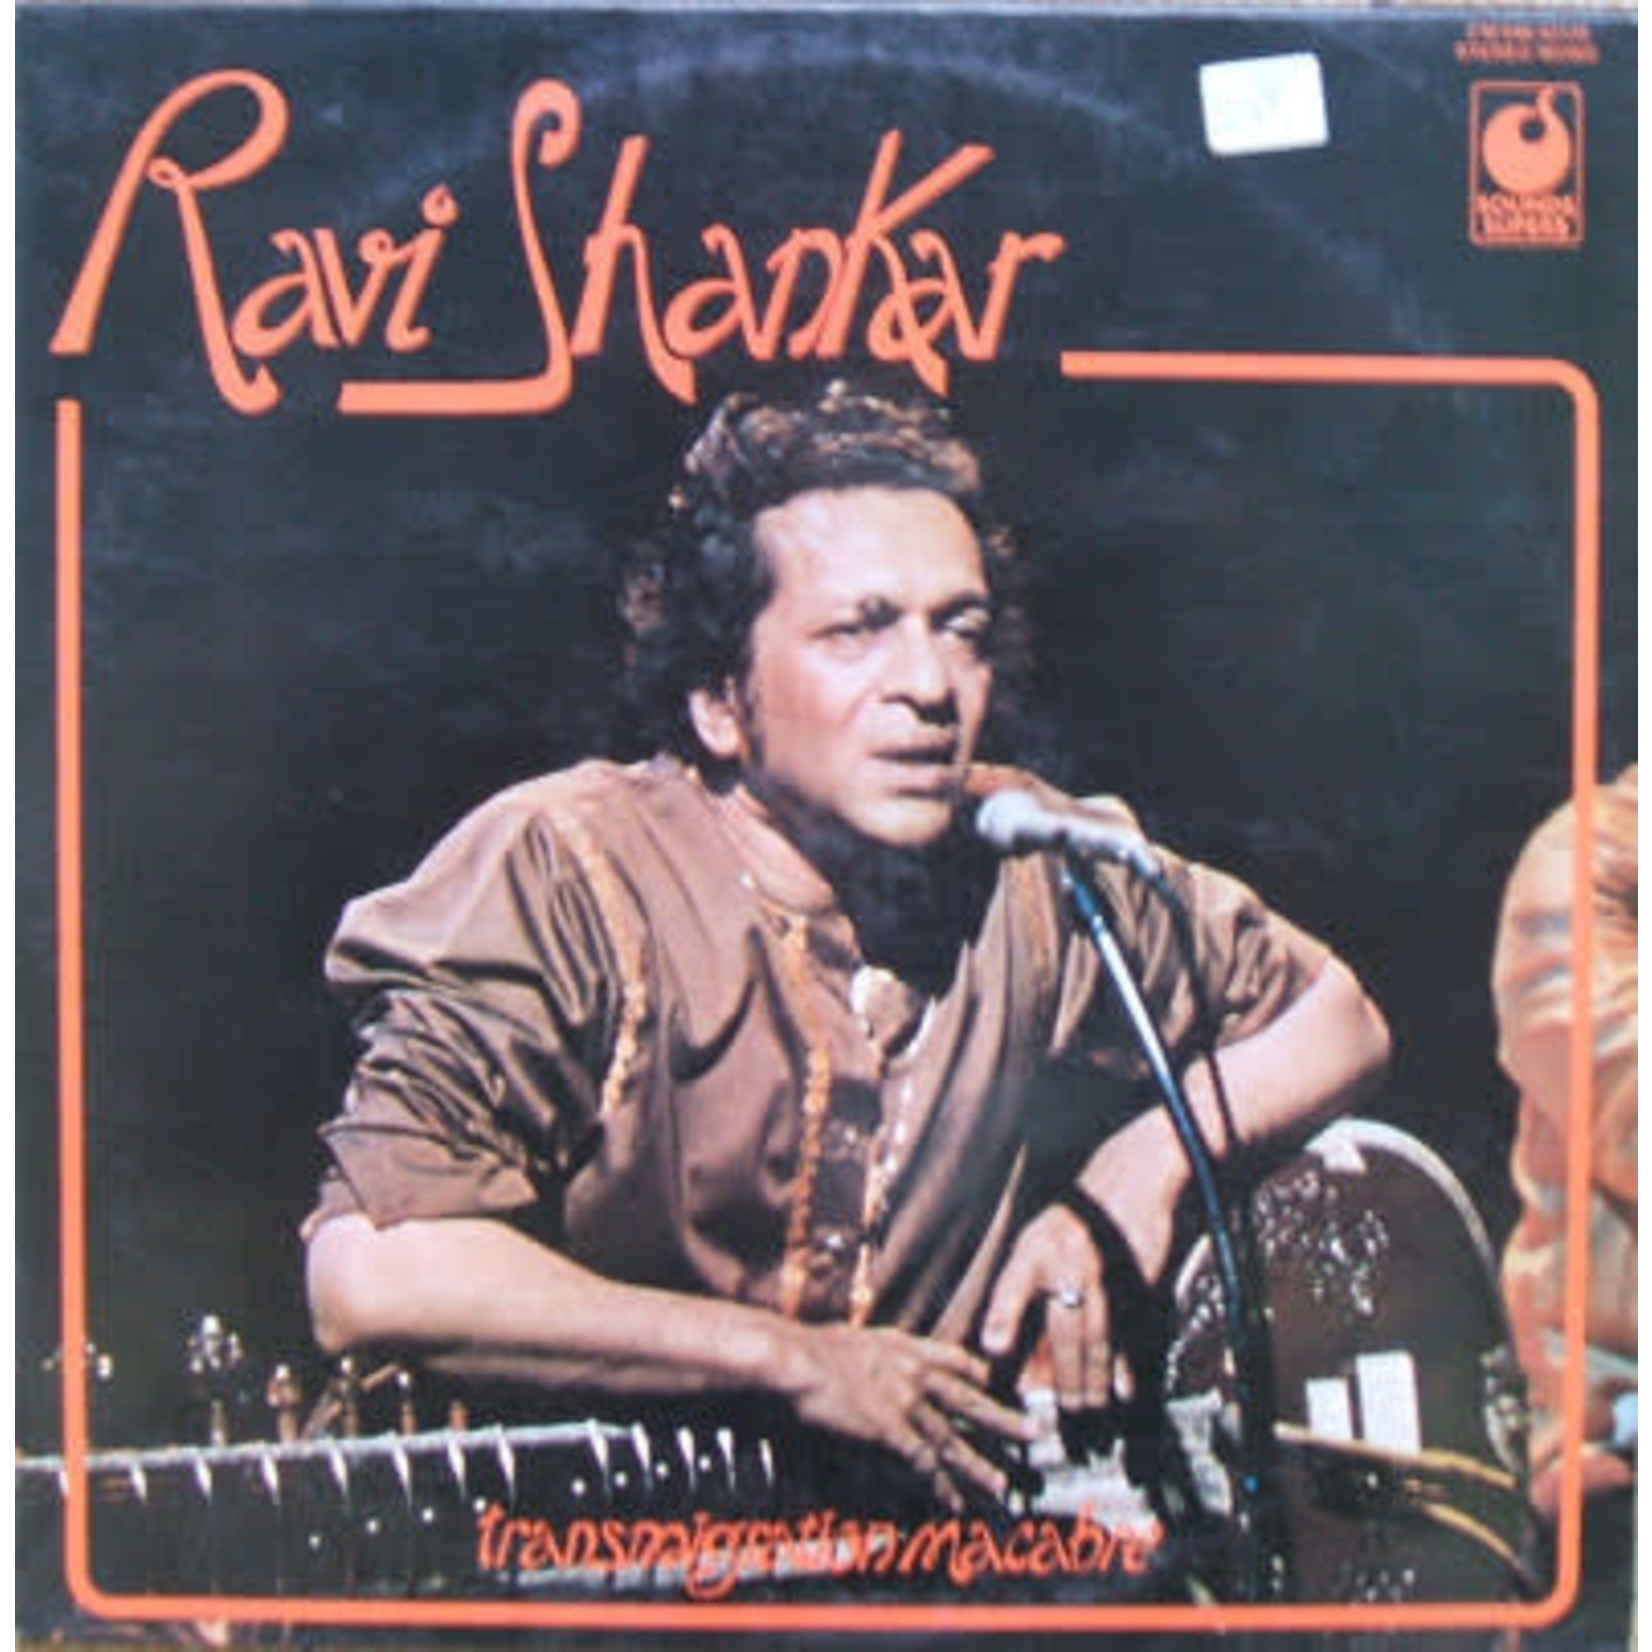 SHANKAR, RAVI - TRANSMIGRATION MACABRE - LP (BELGIAN PRESSING) 1975